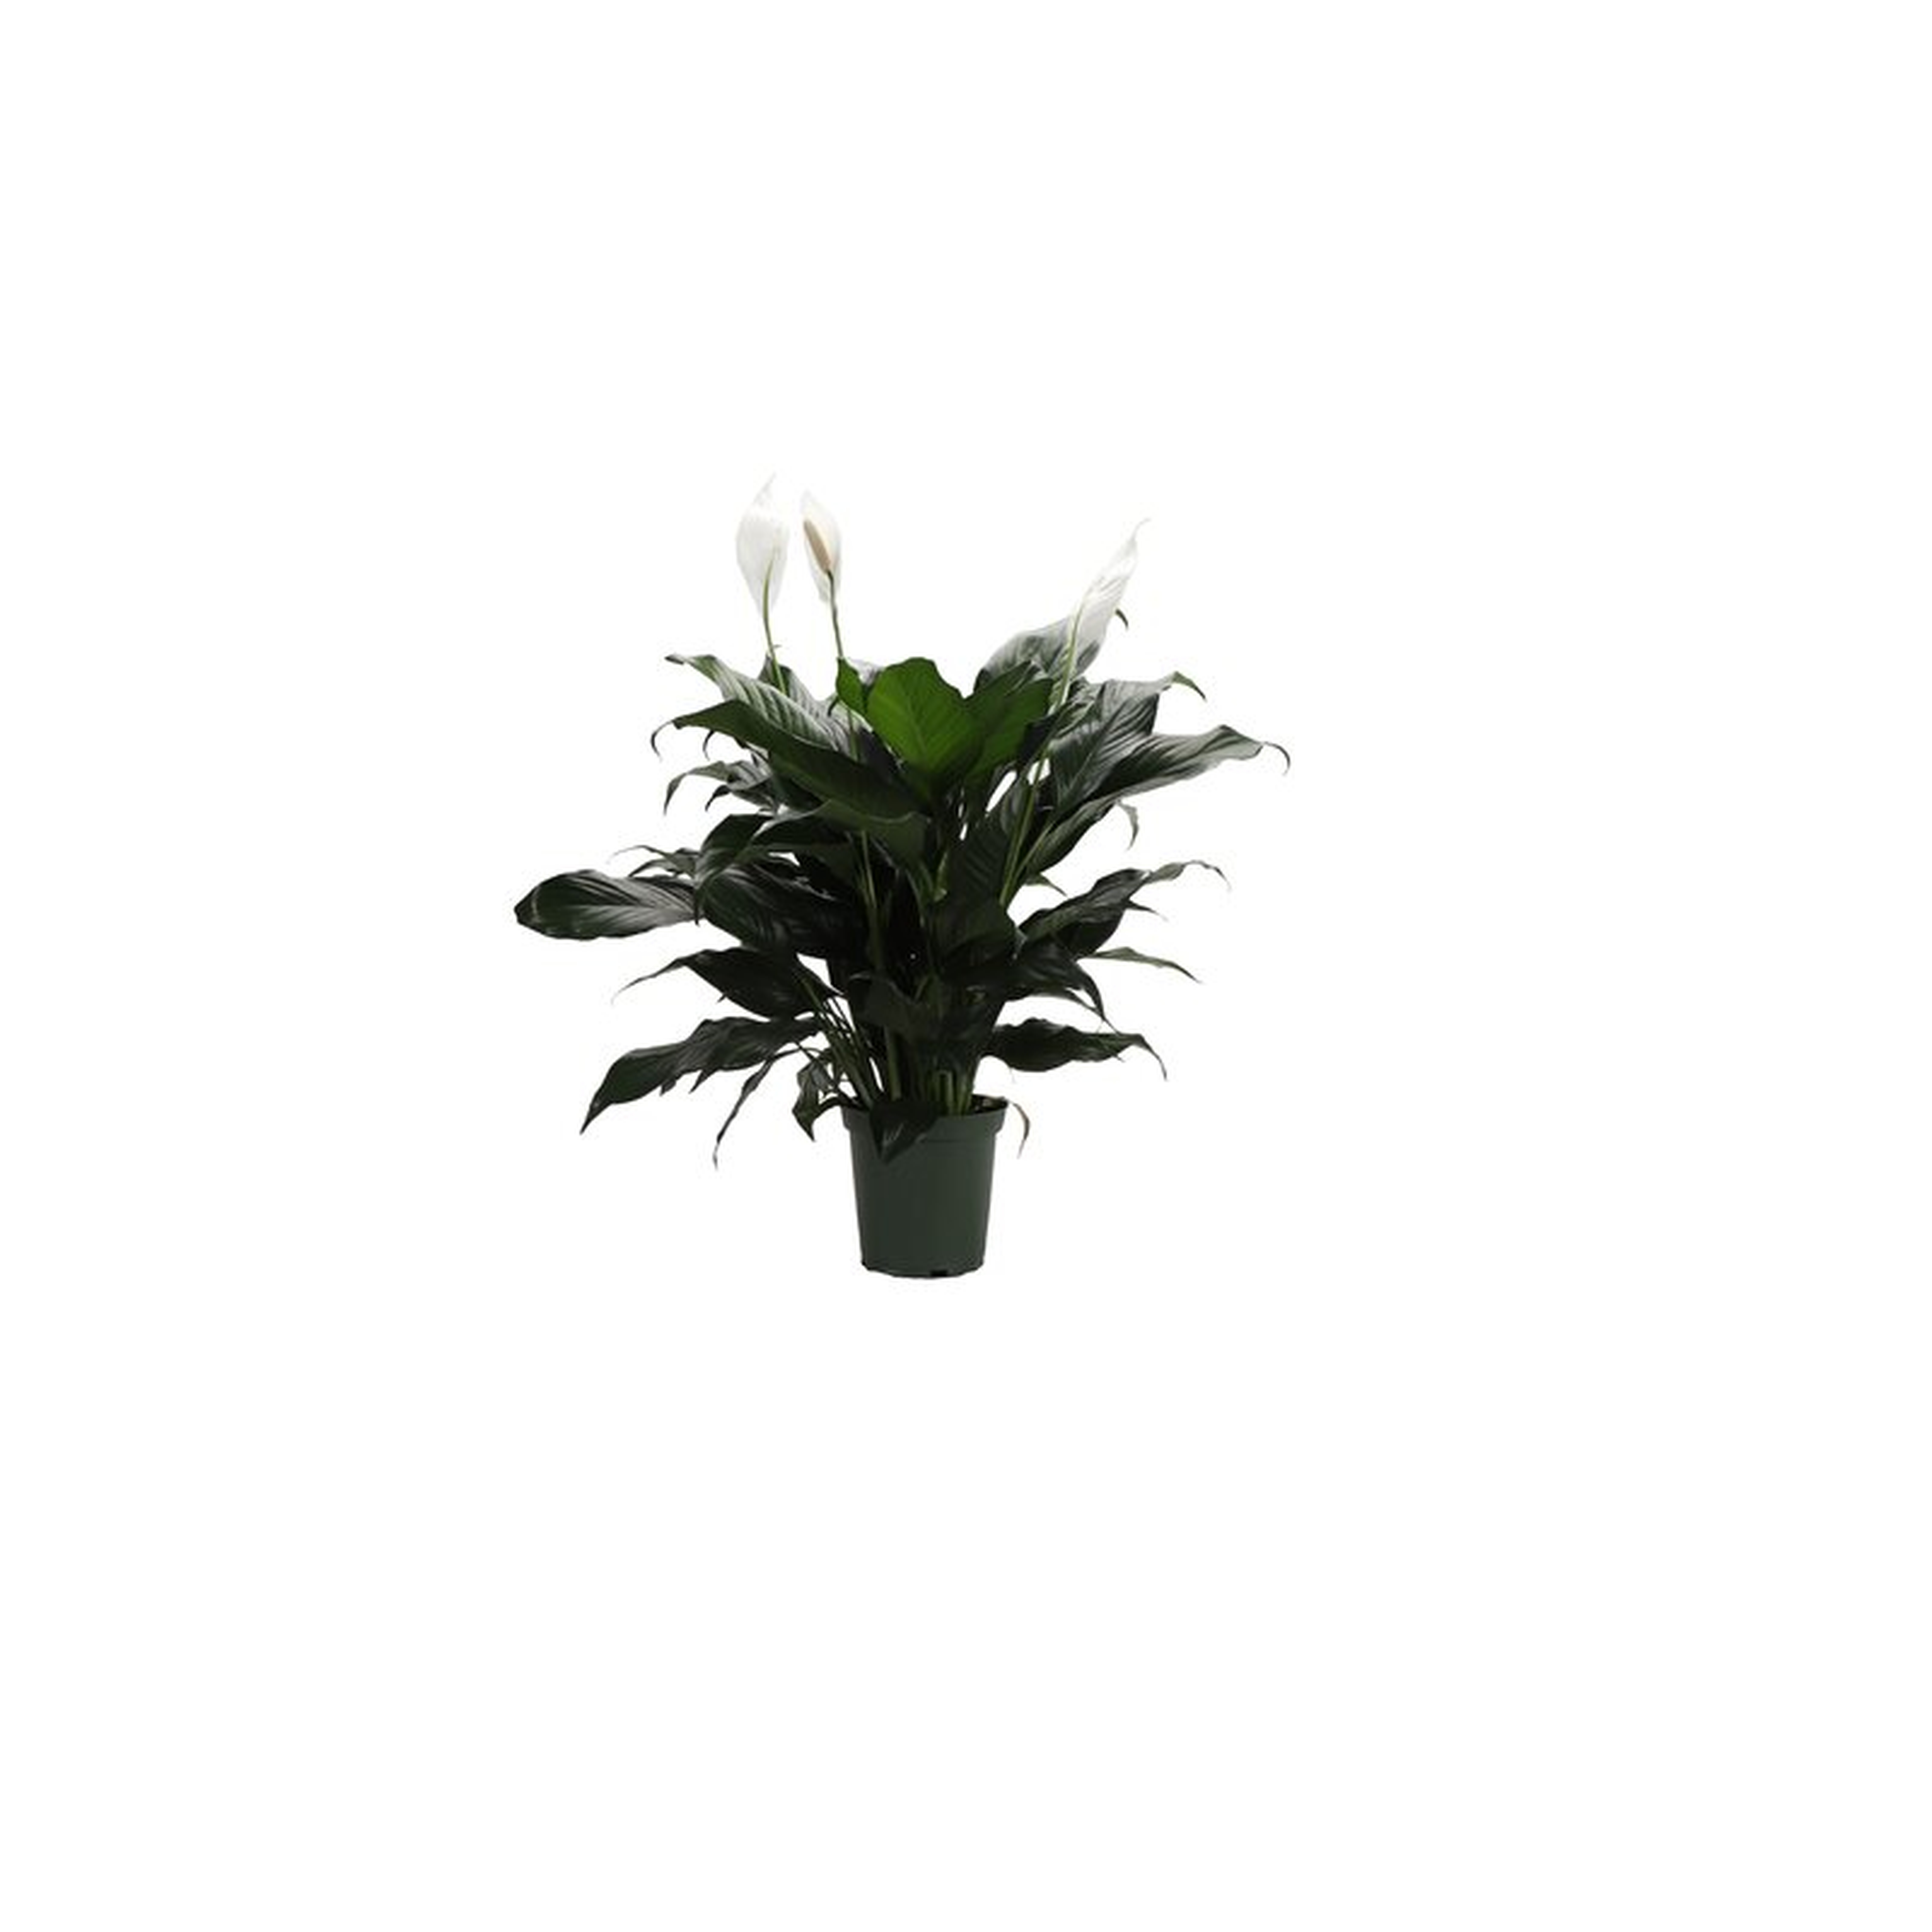 Thorsen's Greenhouse Live Peace Lily Plant, 6"" Diameter - Perigold